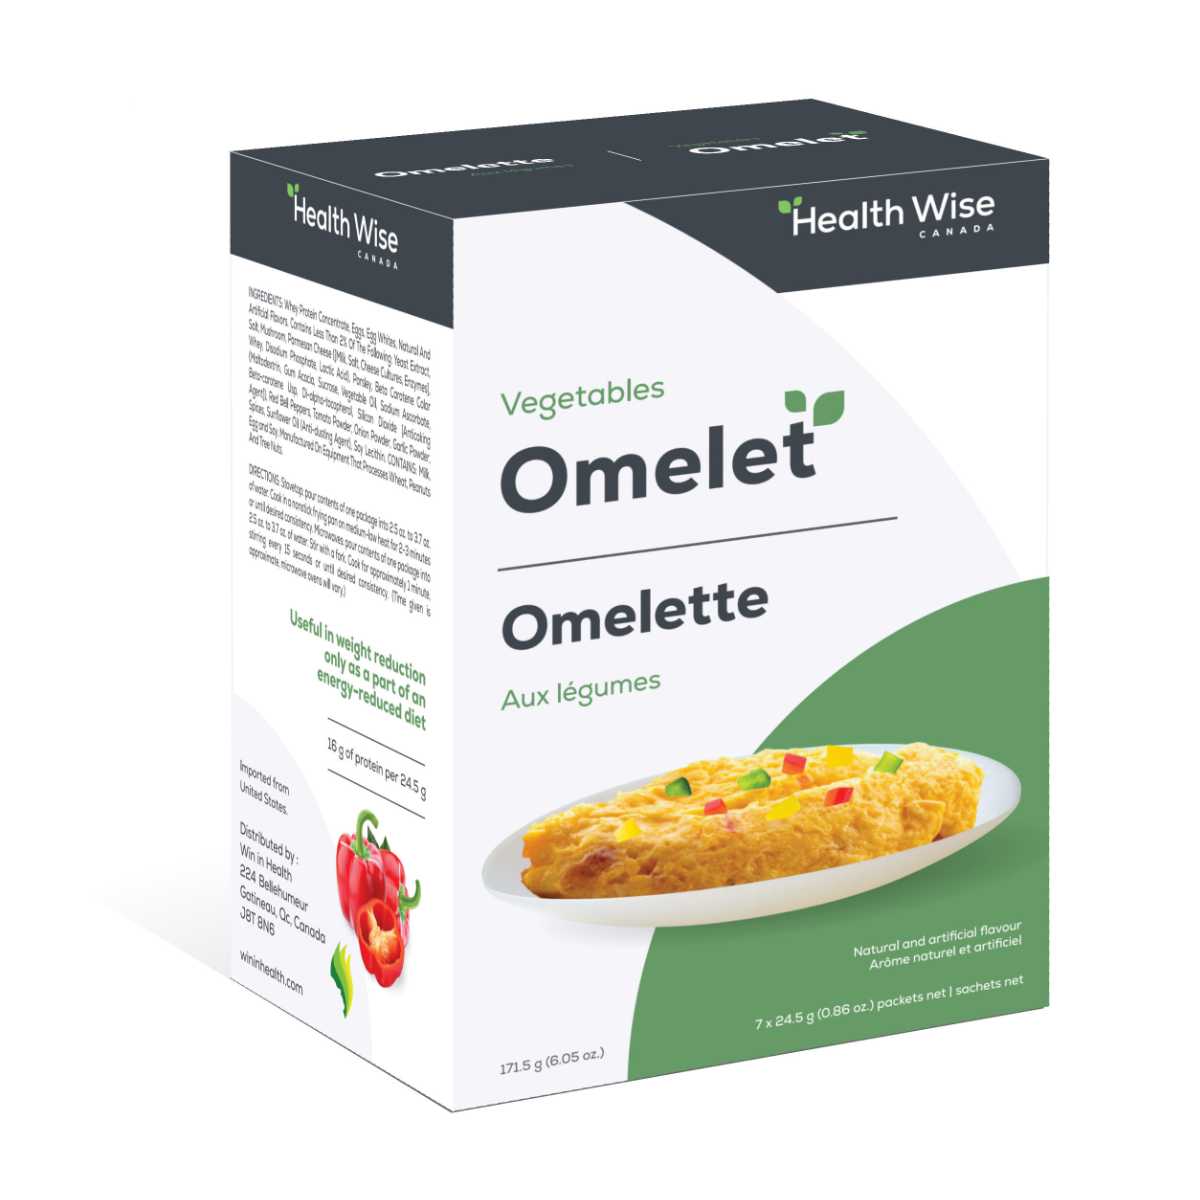 Healthwise - protein breakfast - vegetable omelet